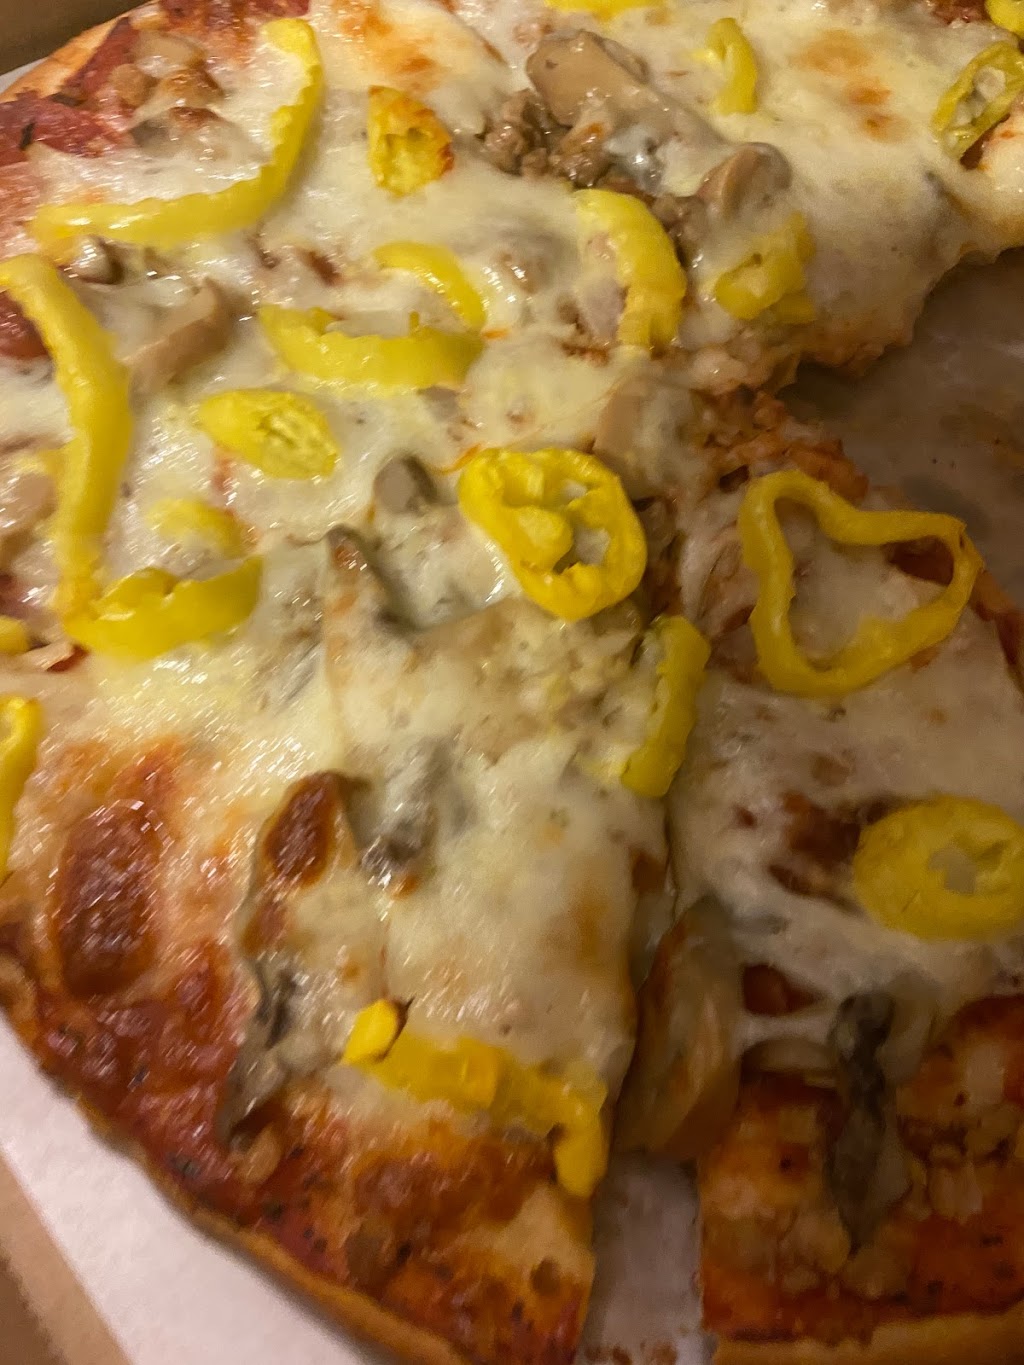 Angilos Pizza | 807 Loveland Madeira Rd, Loveland, OH 45140 | Phone: (513) 683-0001